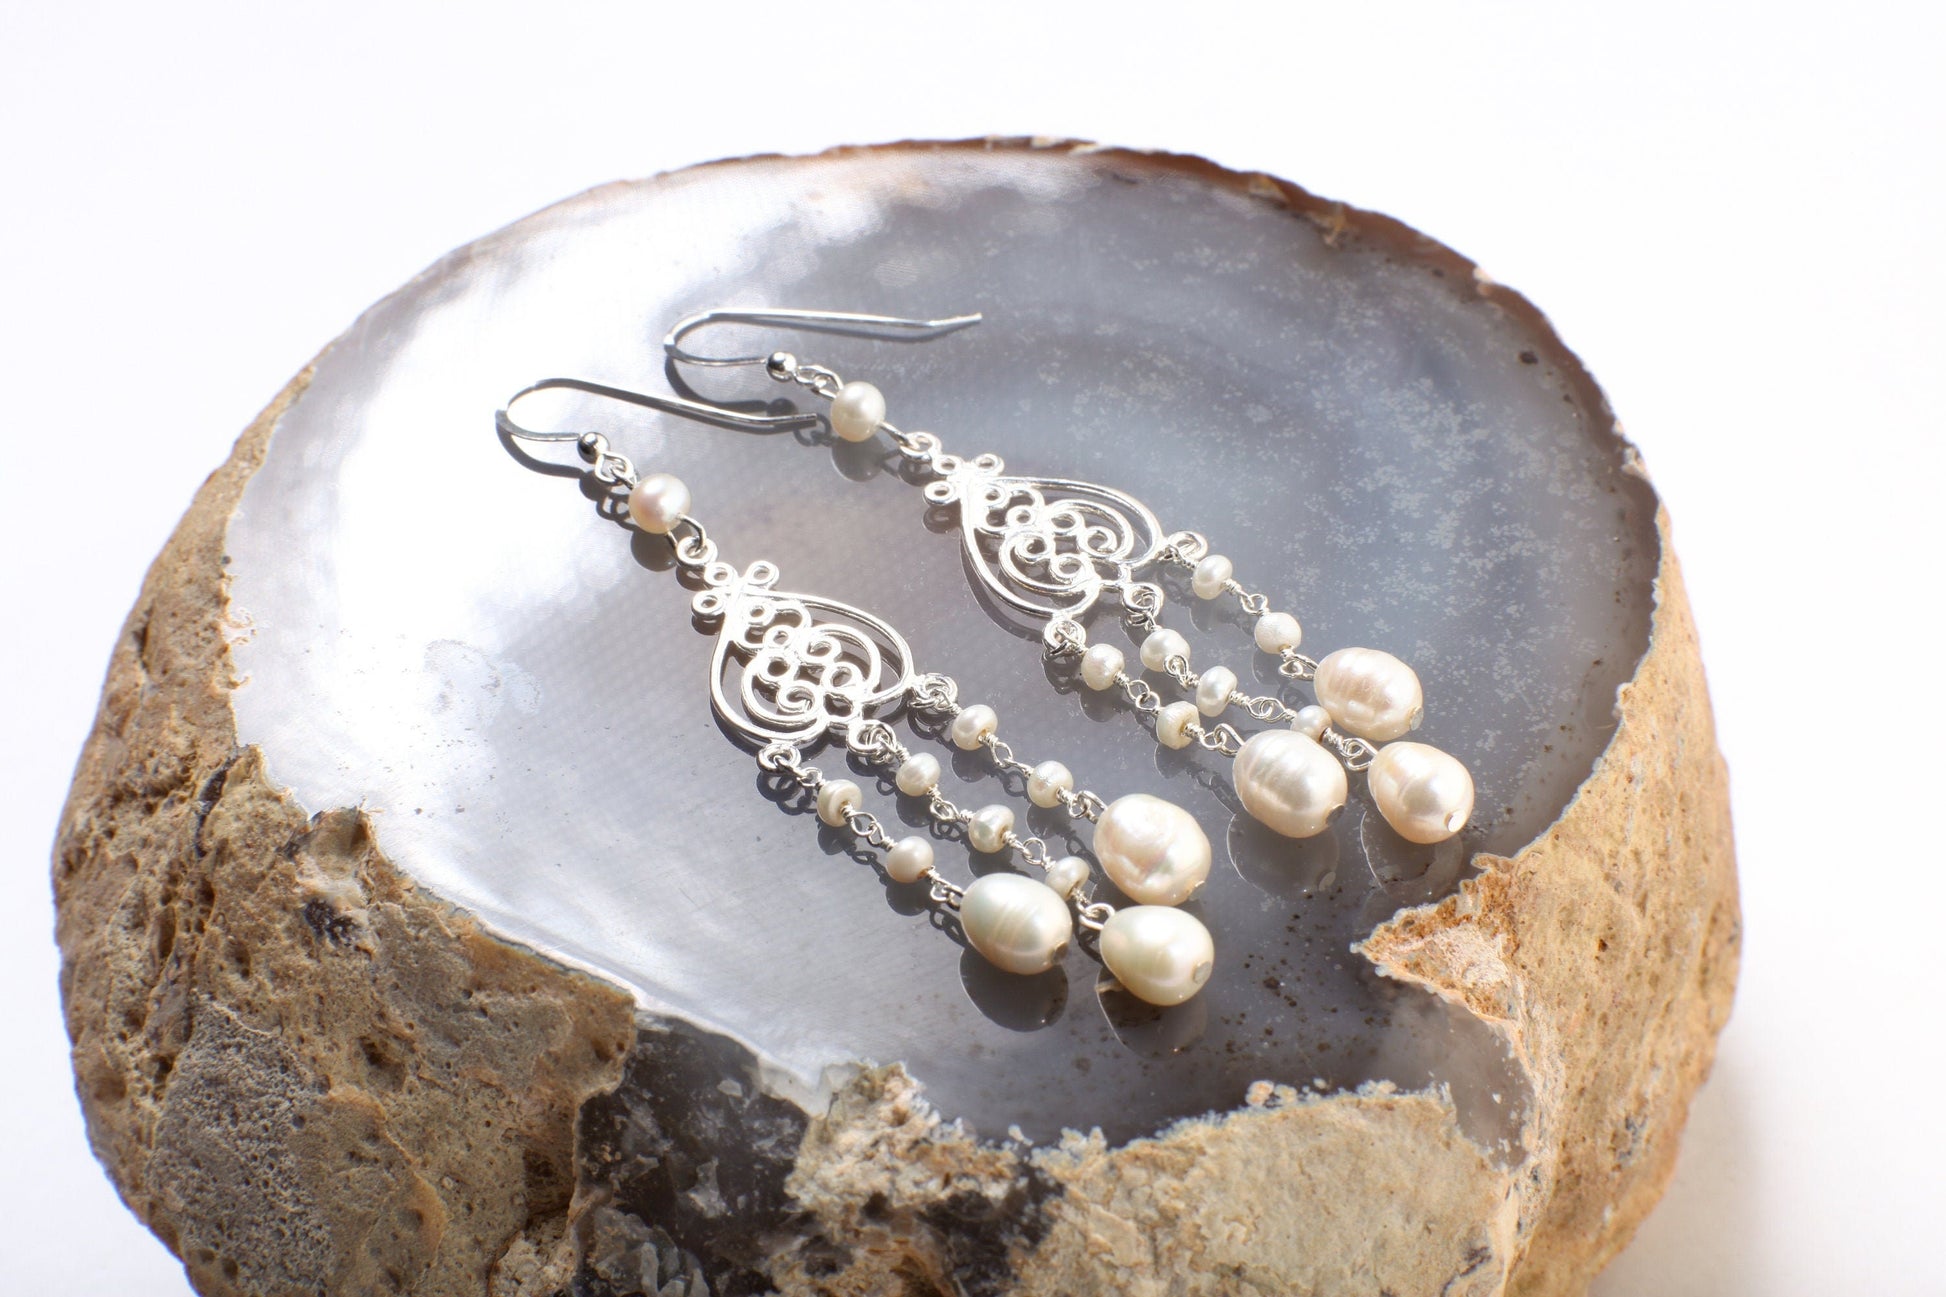 Genuine Freshwater Cultural Pearl Earrings, Freshwater Pearl Earrings in 925 Sterling Silver Chandelier and Earwire, Handmade Gift for Her